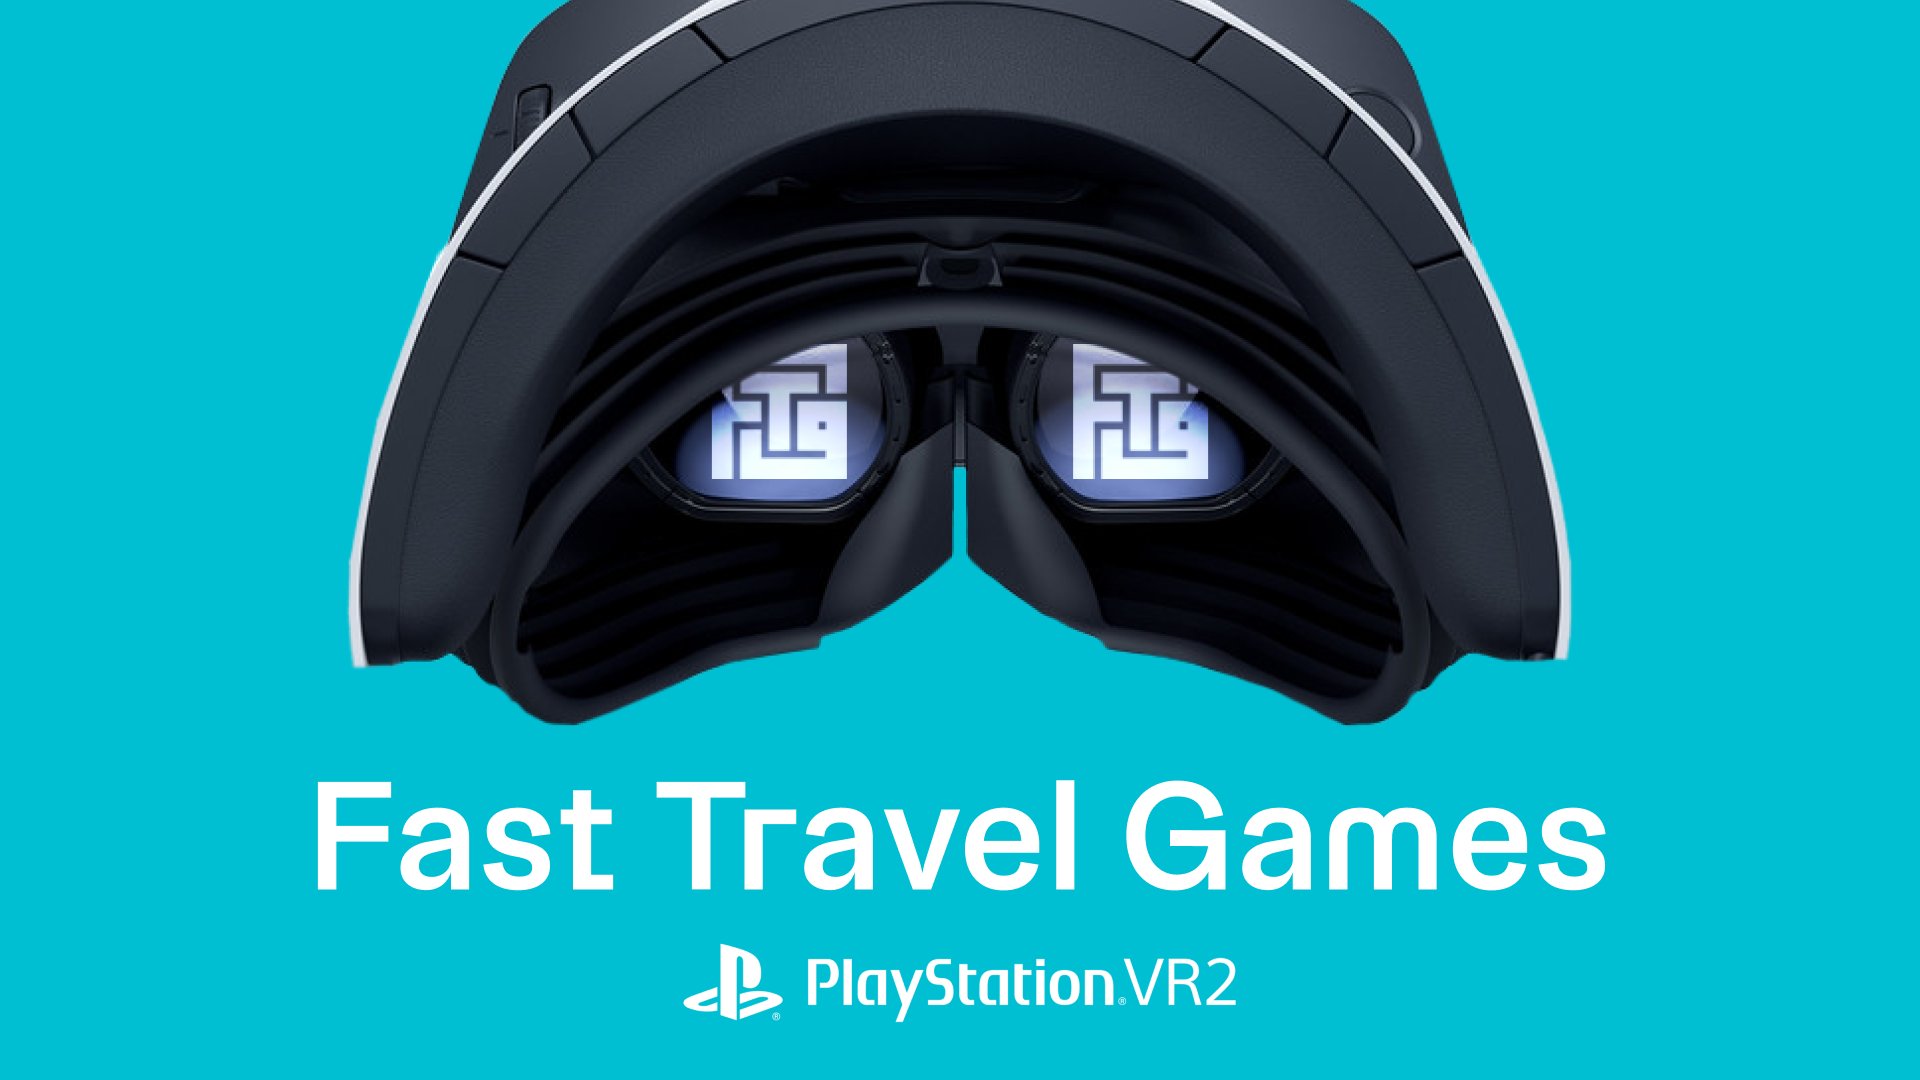 Fast Travel Games Playstation VR2